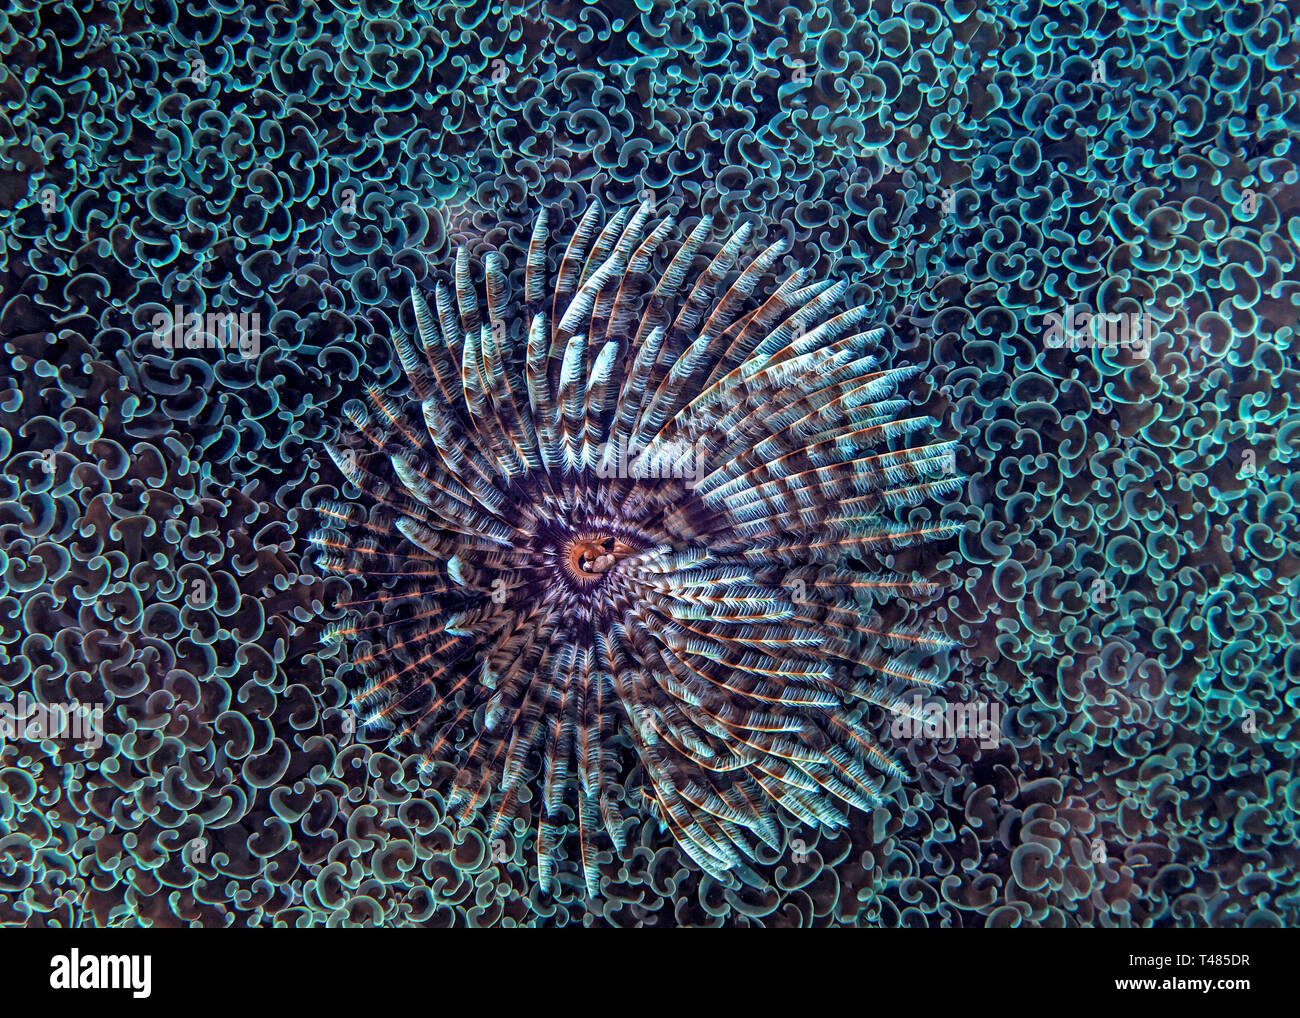 Featherduster Rohr Wurm macht seine Home unter den Hammer Korallenpolypen. Stockfoto